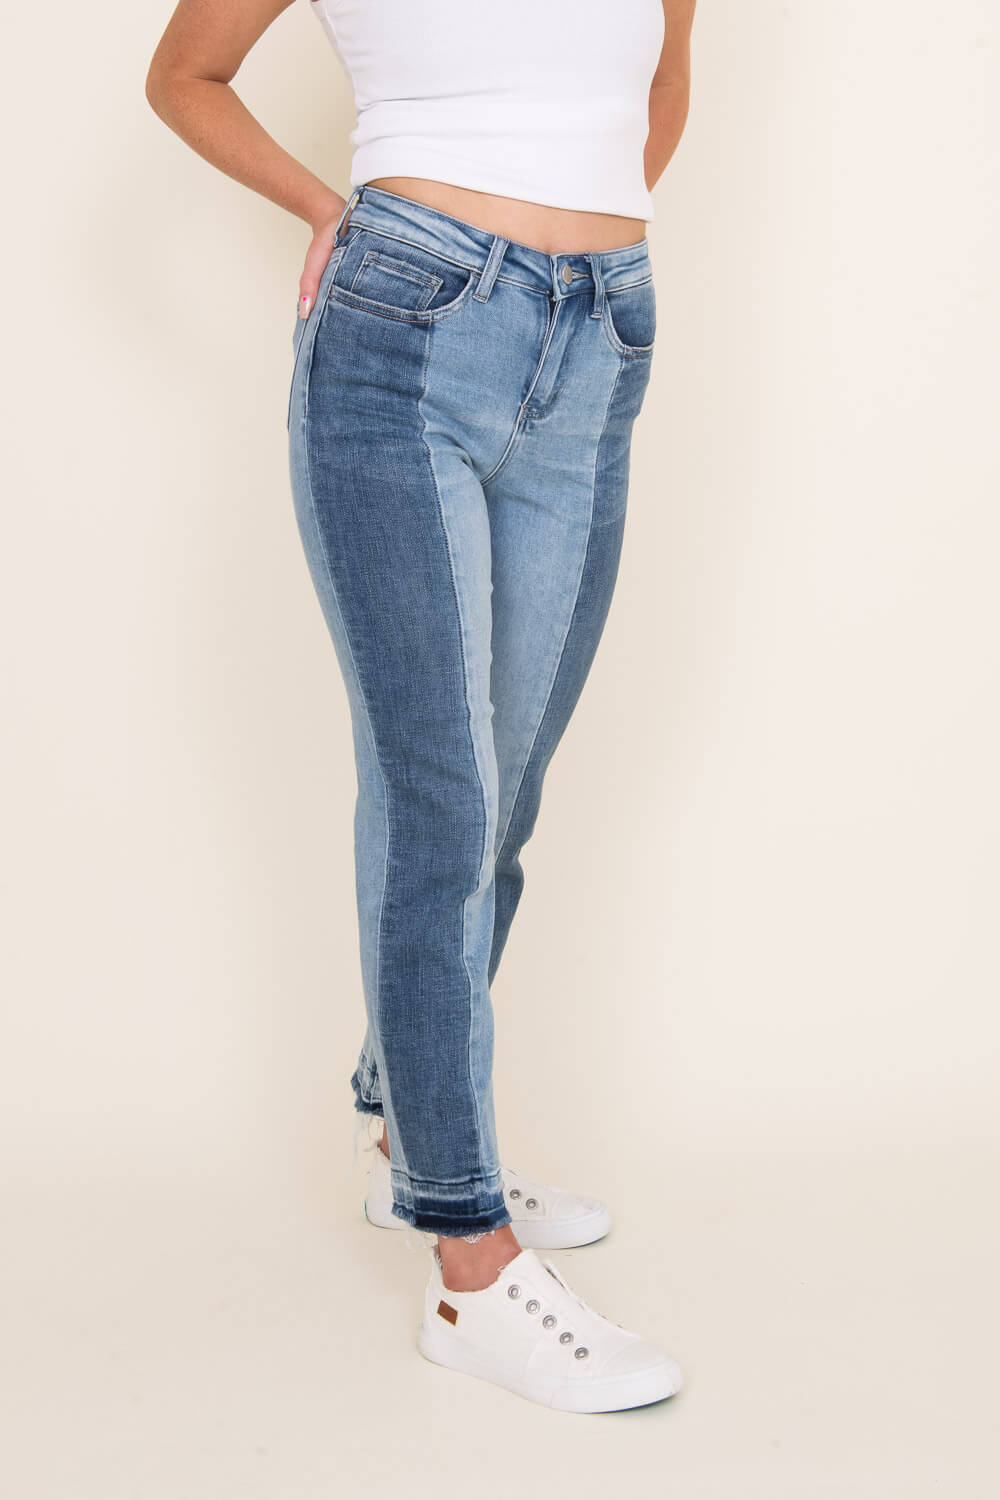 Shop Jeans For Women, Denim & Colored Jeans